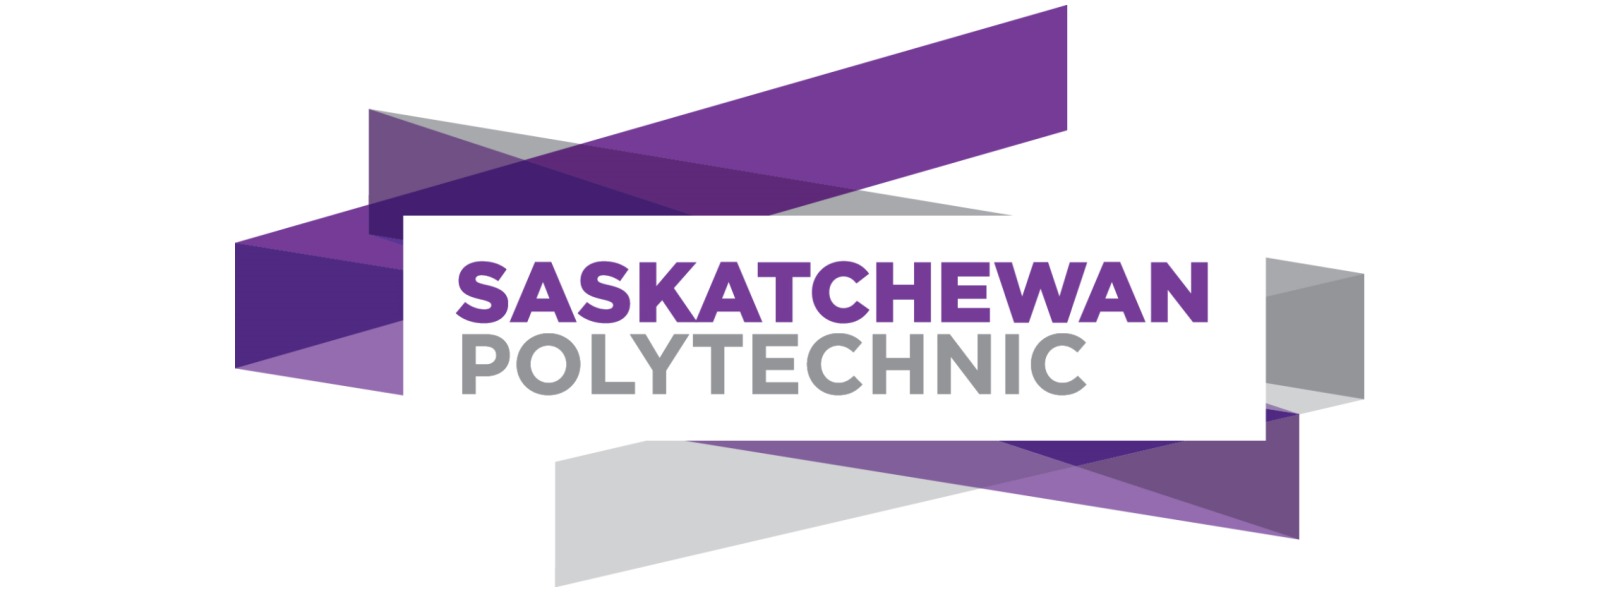 ALiGN Network - OTEC and Saskatchewan Polytechnic